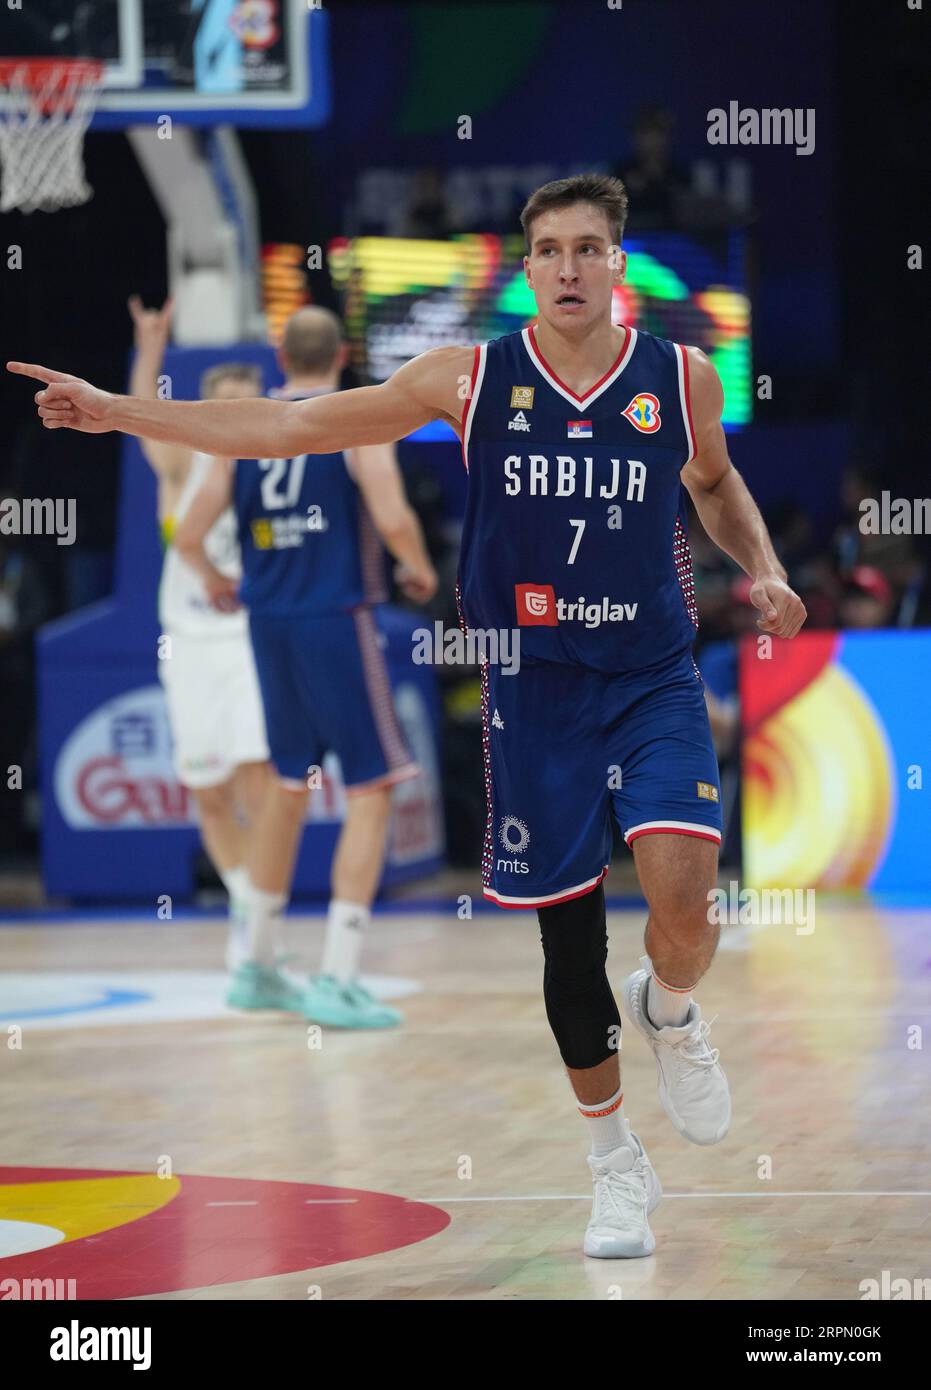 2023 FIBA World Cup: Bogdan Bogdanovic leads Serbia into semifinals, 87-68  - Peachtree Hoops